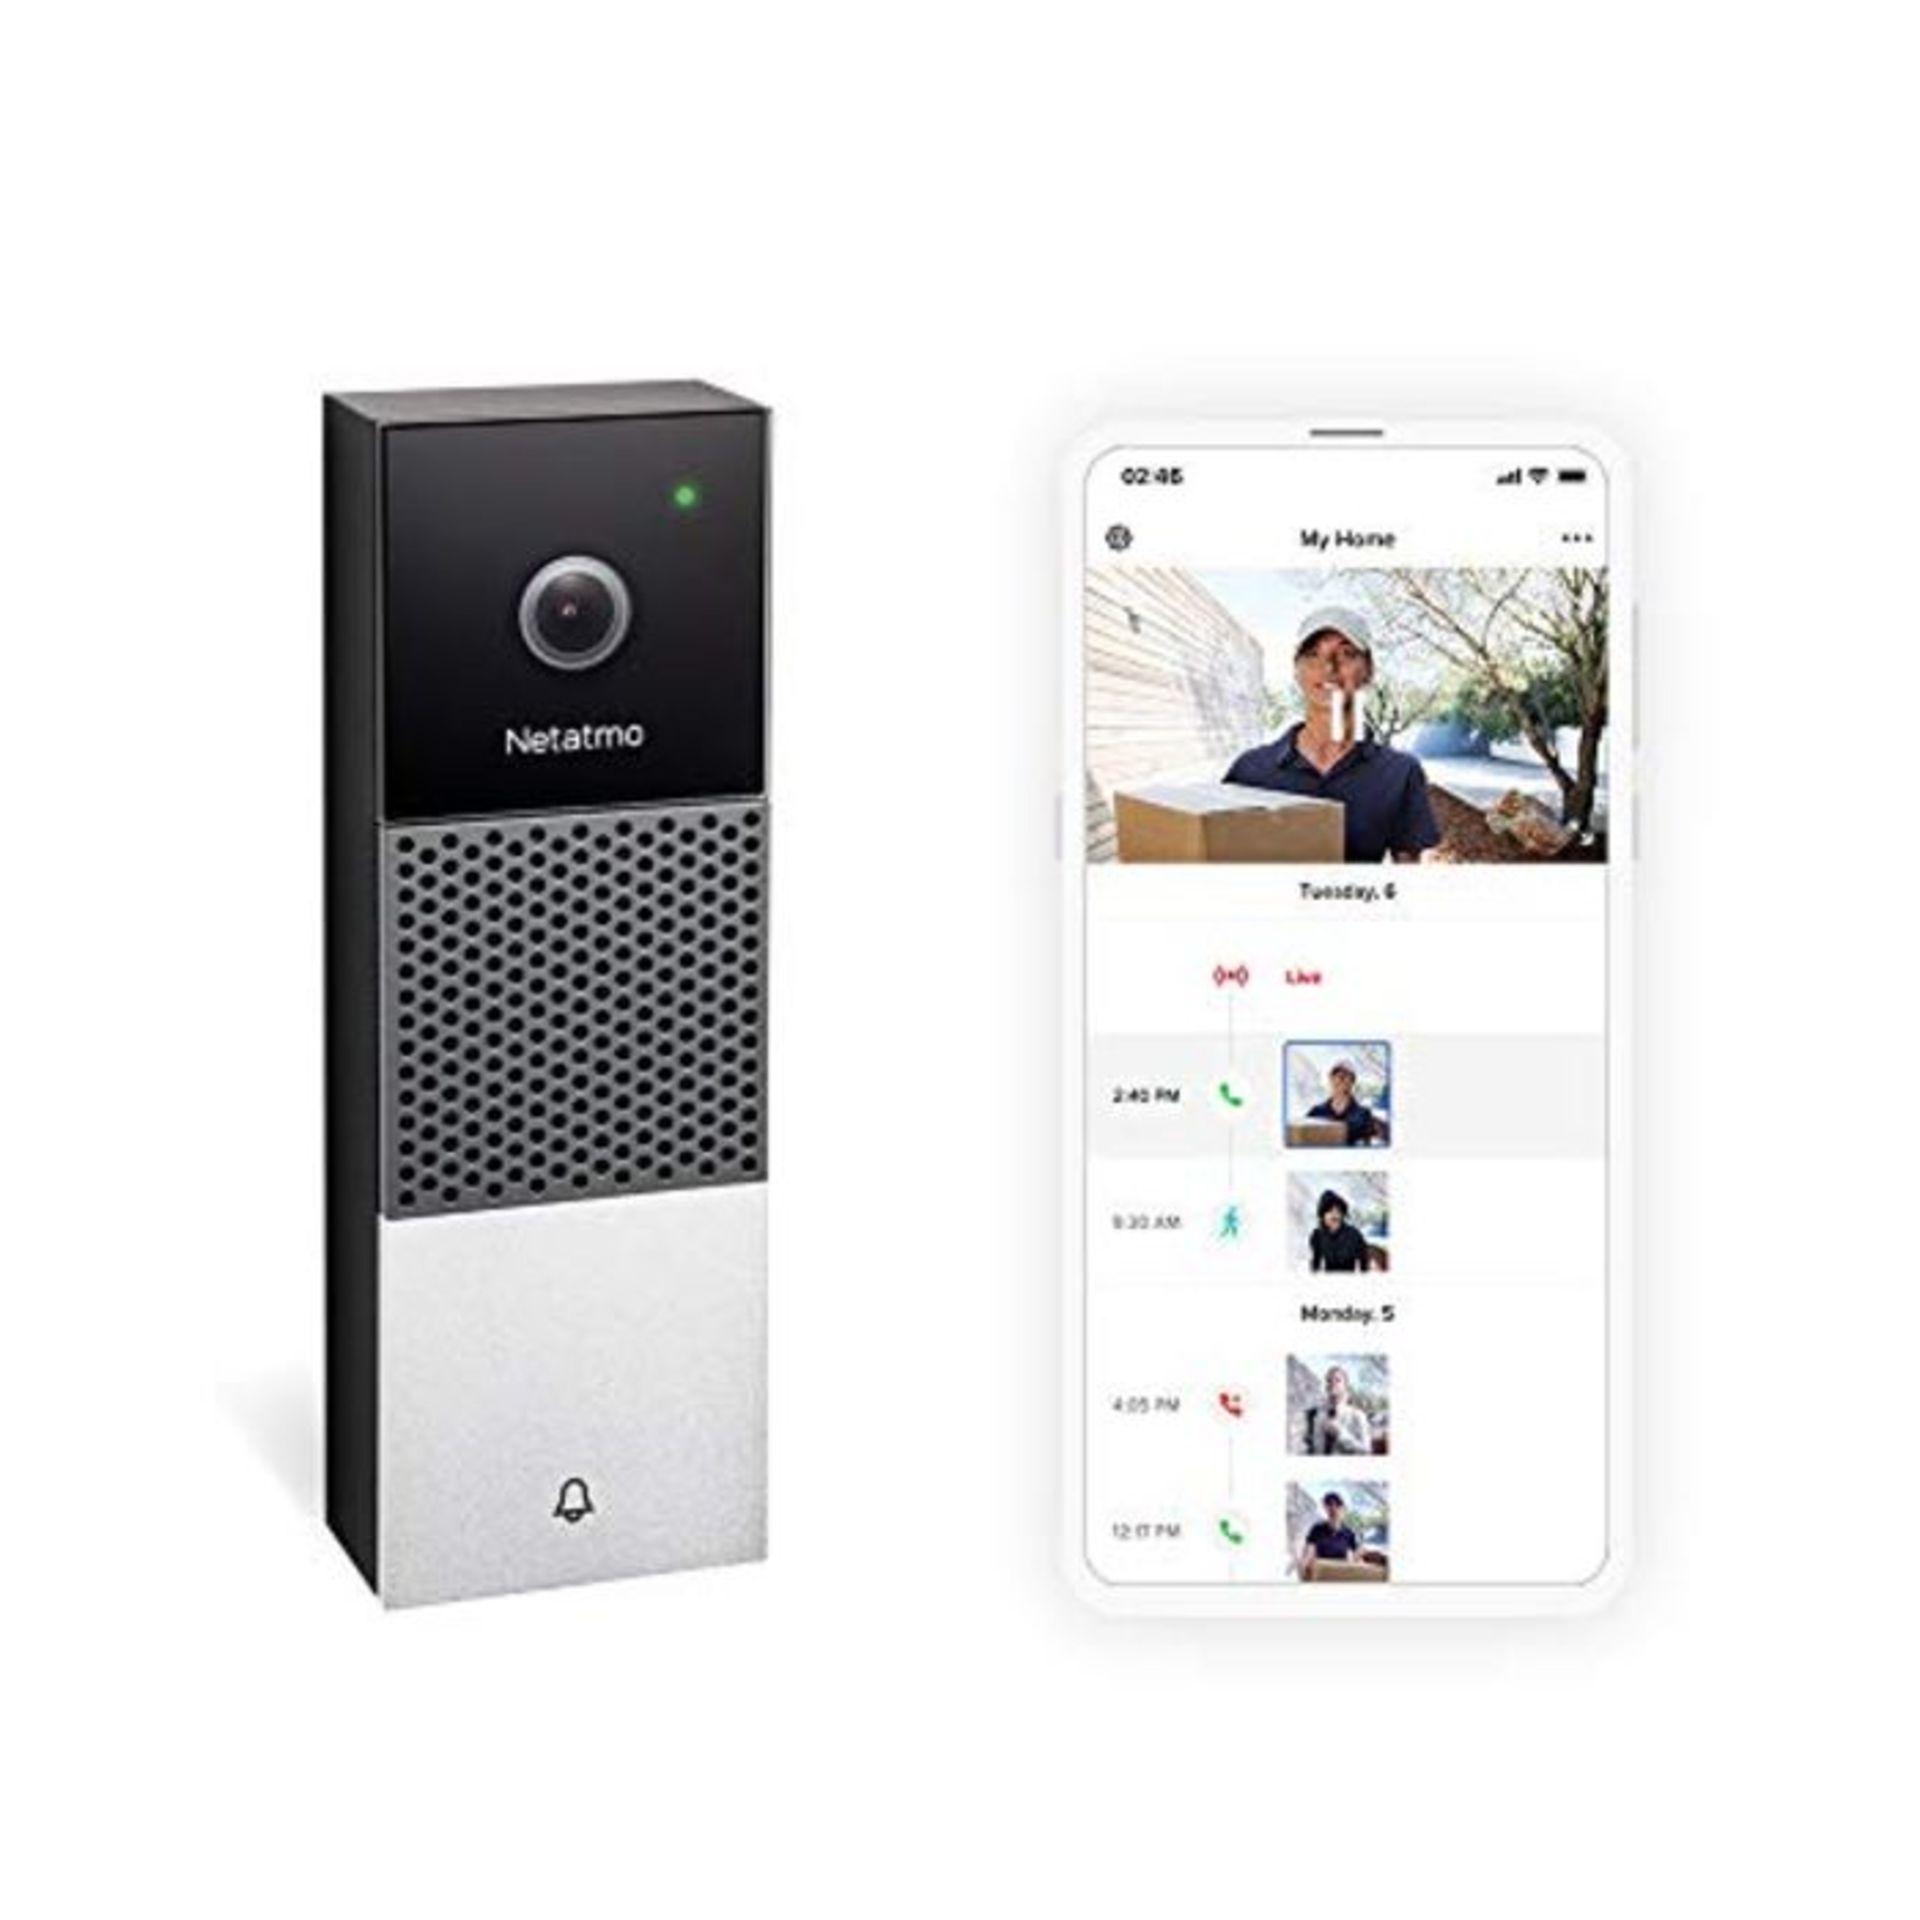 RRP £219.00 Netatmo Smart Video Doorbell, 2-way audio, Person Detection, No Subscription Fees, HD